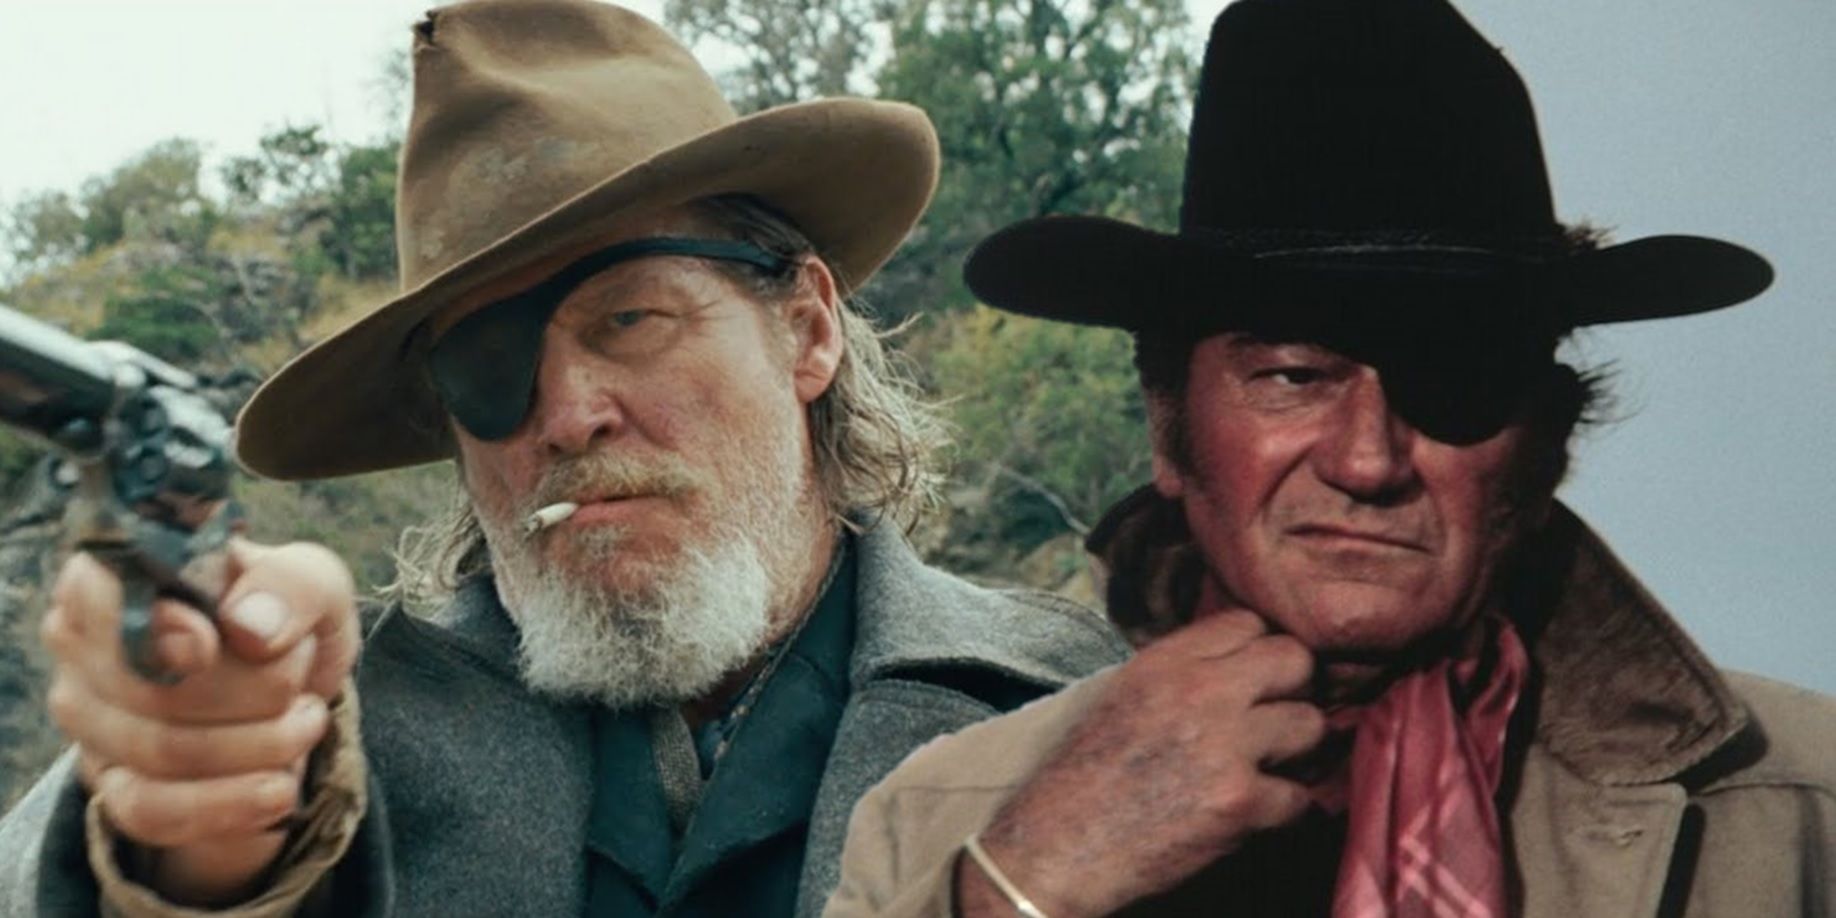 Jeff Bridges and John Wayne as Rooster Cogburn in True Grit